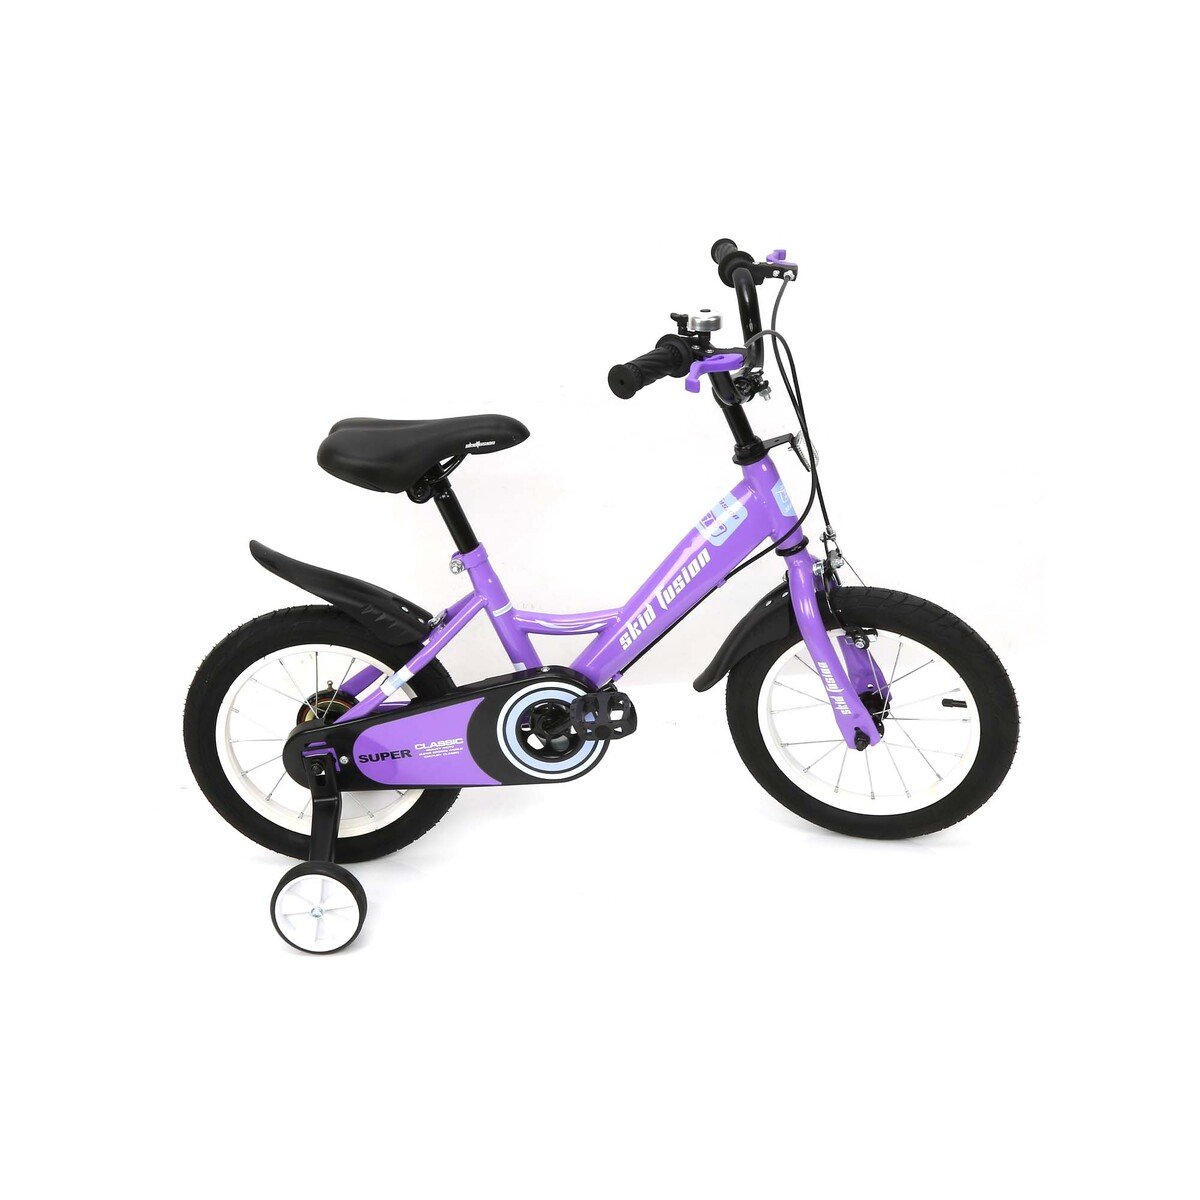 Skid Fusion Kids Bicycle 14" MD10-14 Purple